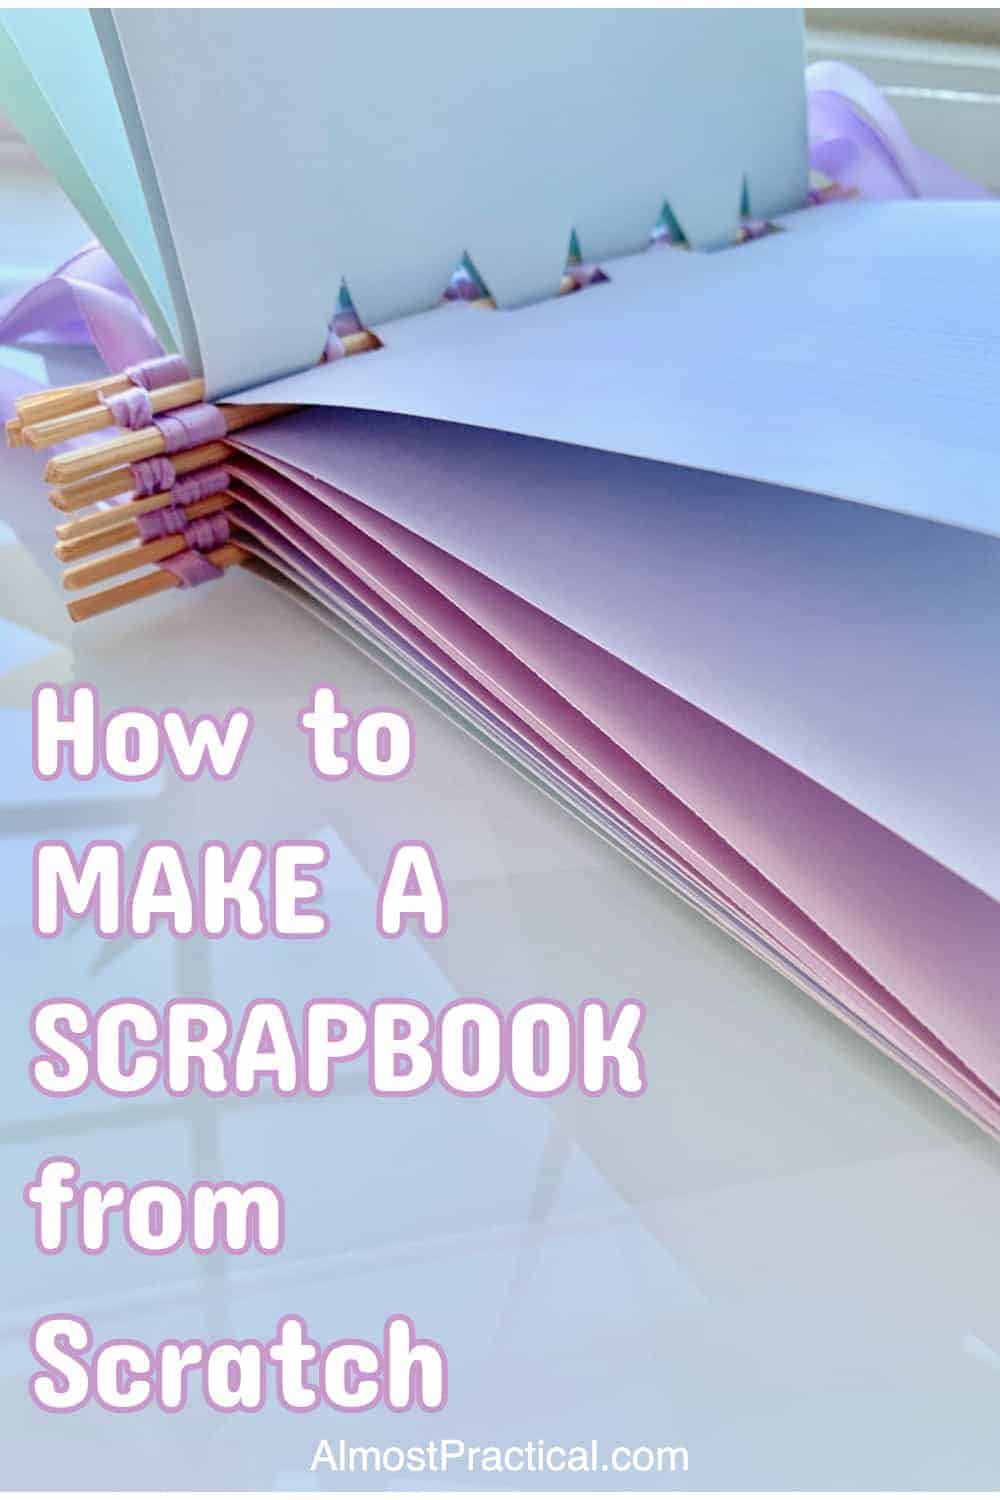 How to Make a Scrapbook - Actually Make the Book Itself - Almost Practical